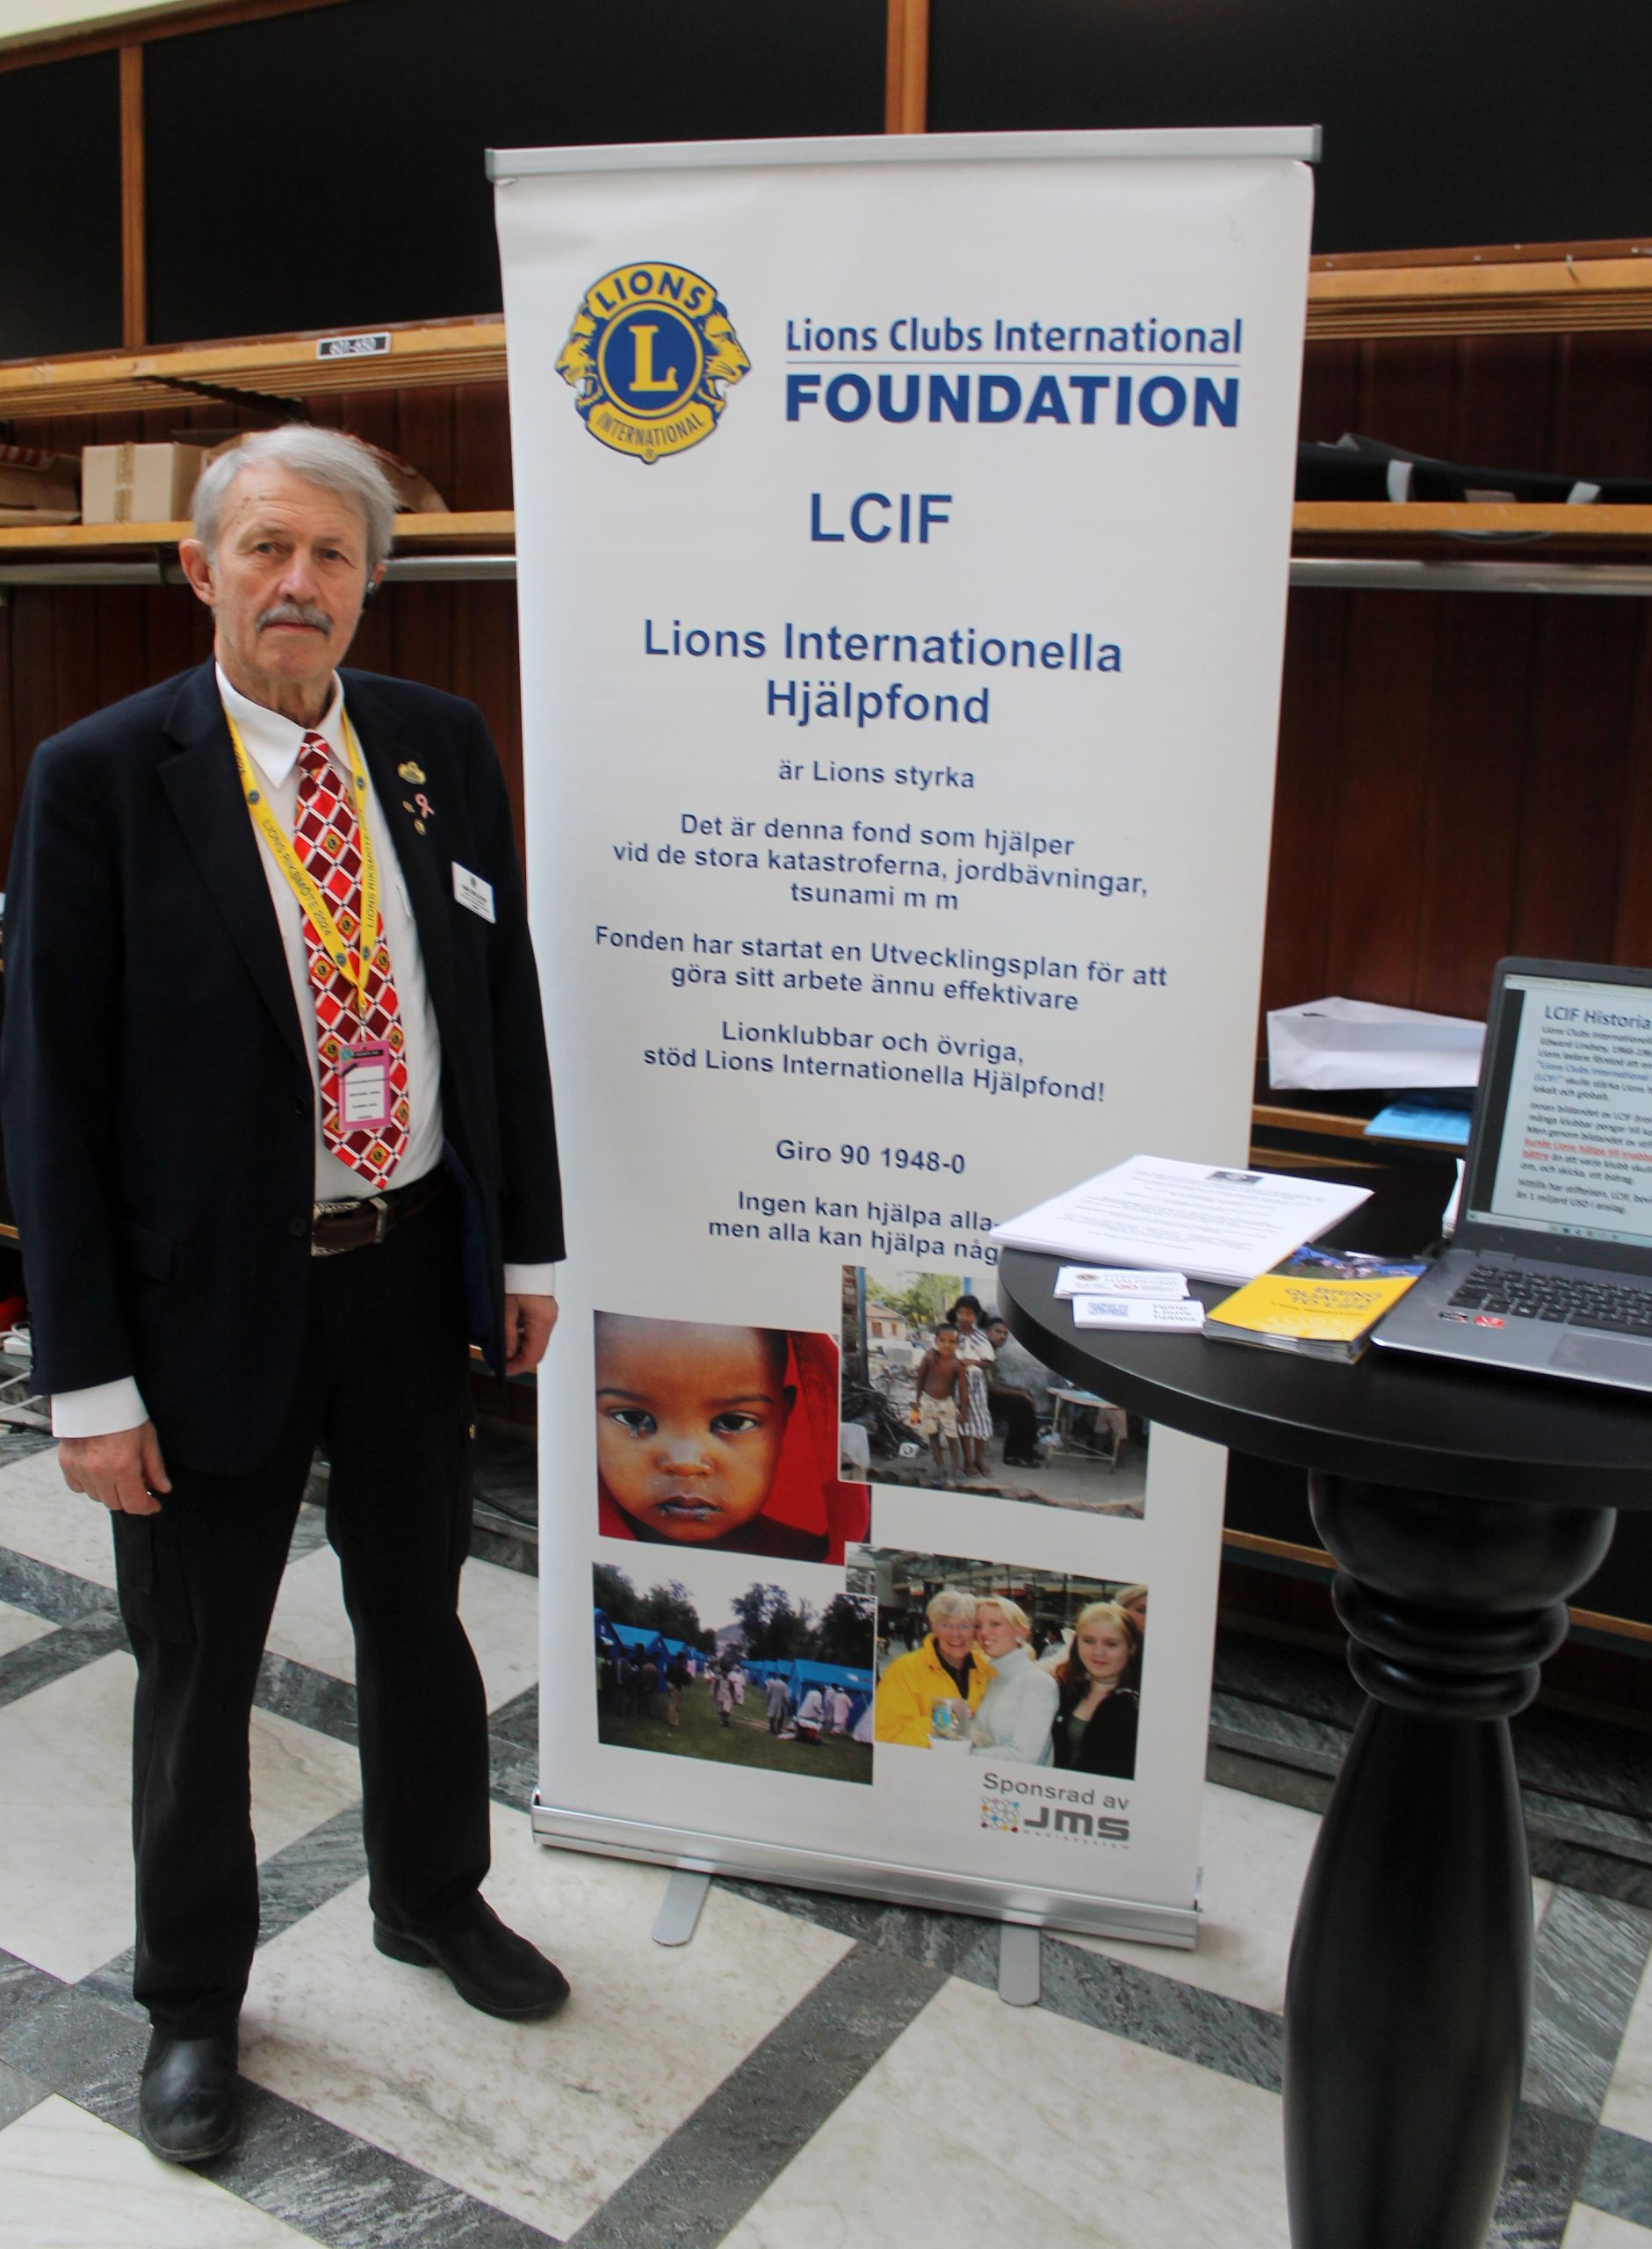 Lions Clubs International Foundation